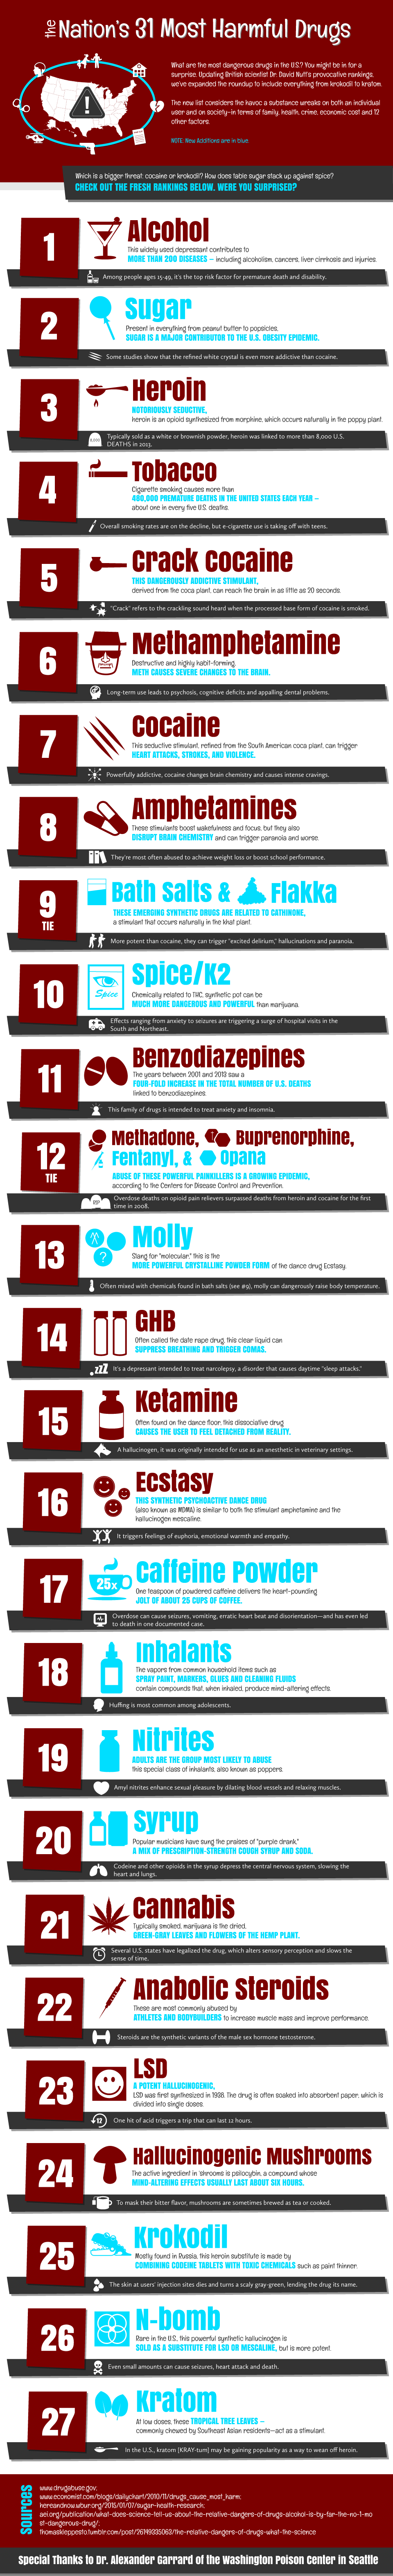 31 Most Harmful Drugs